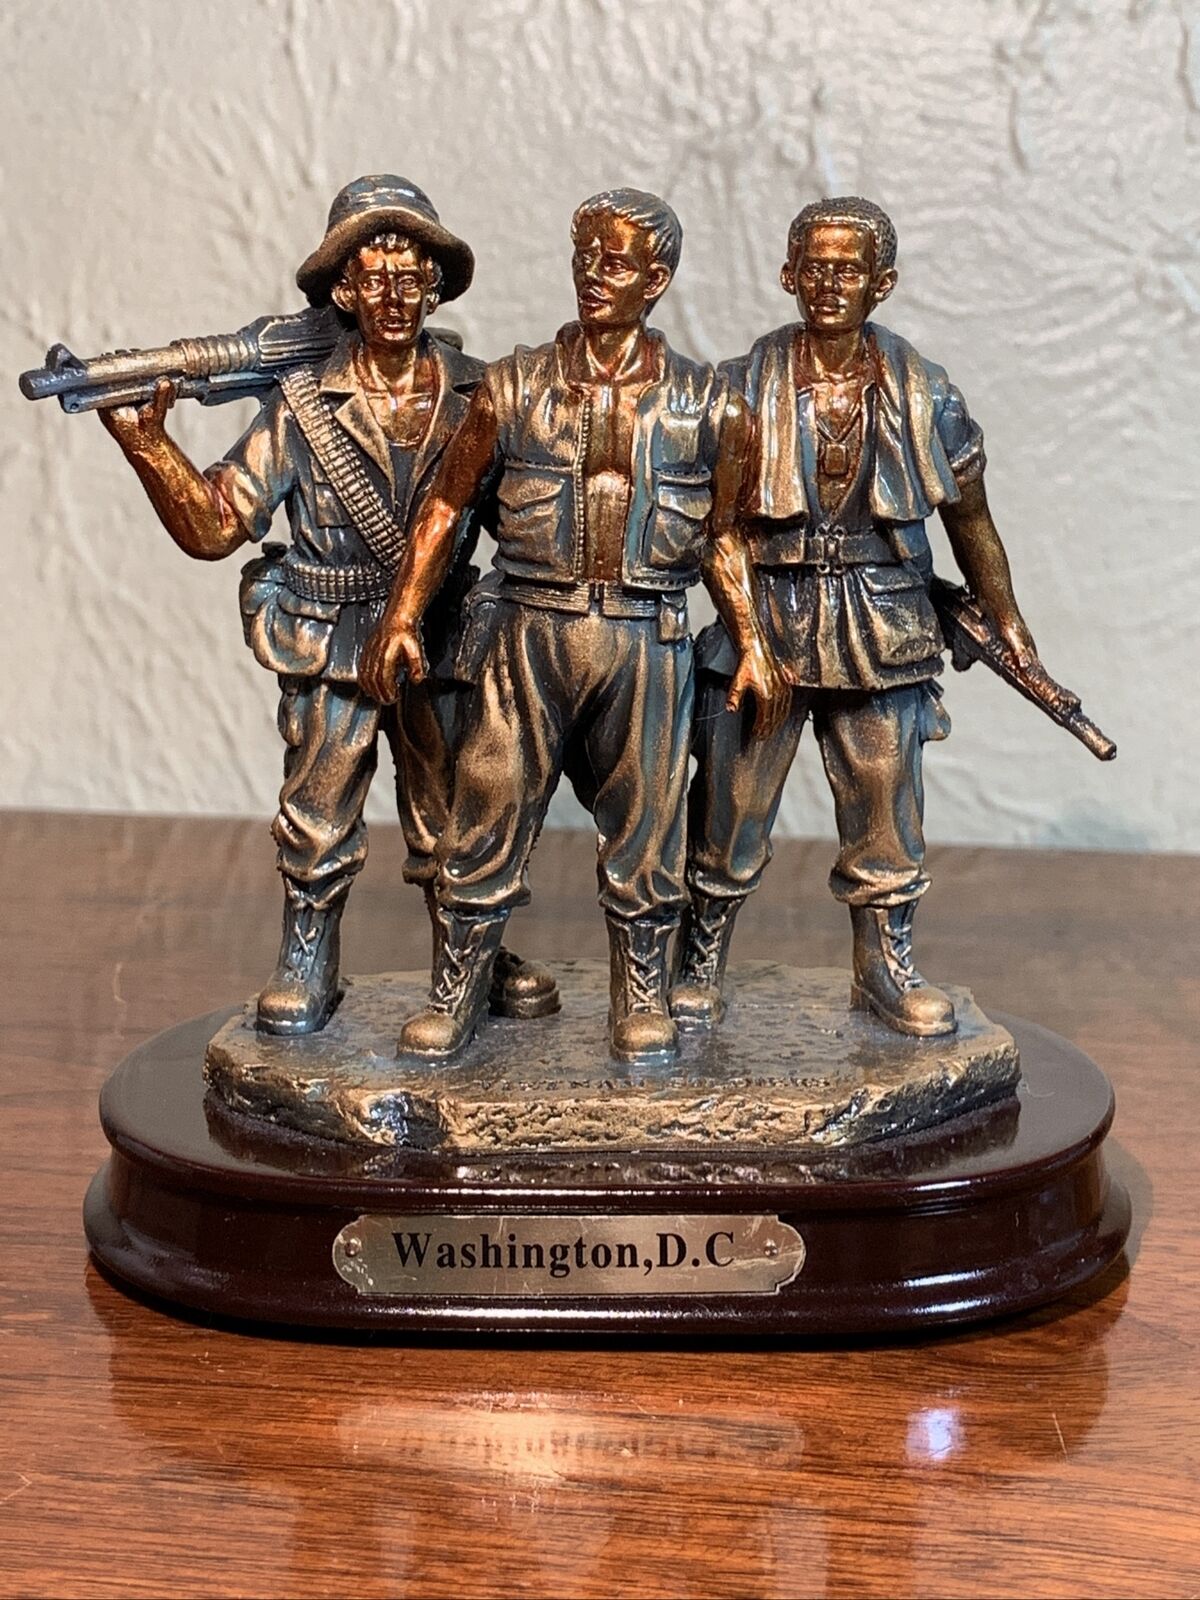 The Three Servicemen Statue,Vietnam Veterans Memorial,washington D.C.